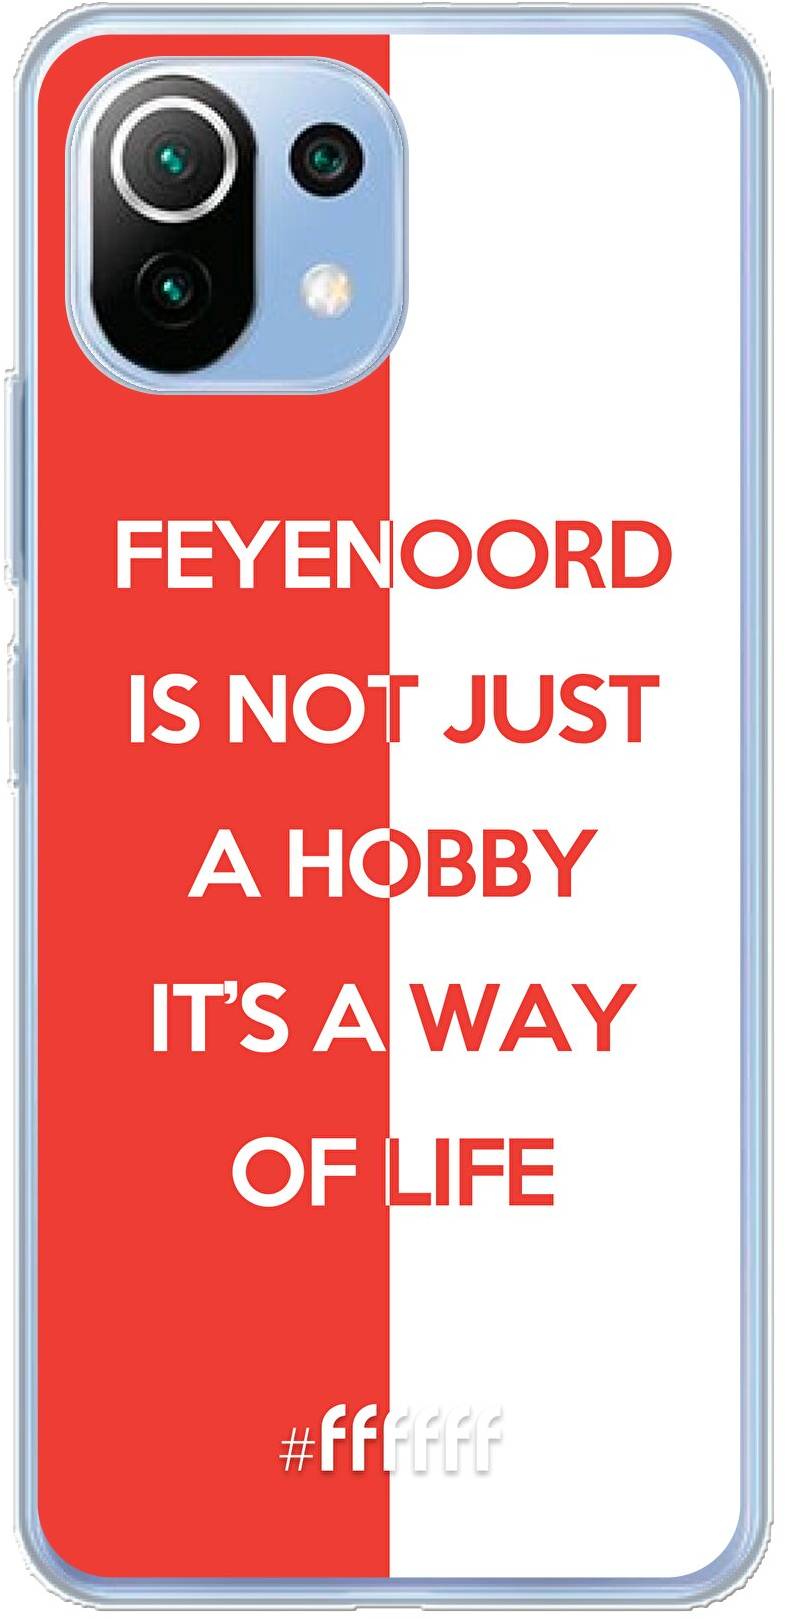 Feyenoord - Way of life Mi 11 Lite